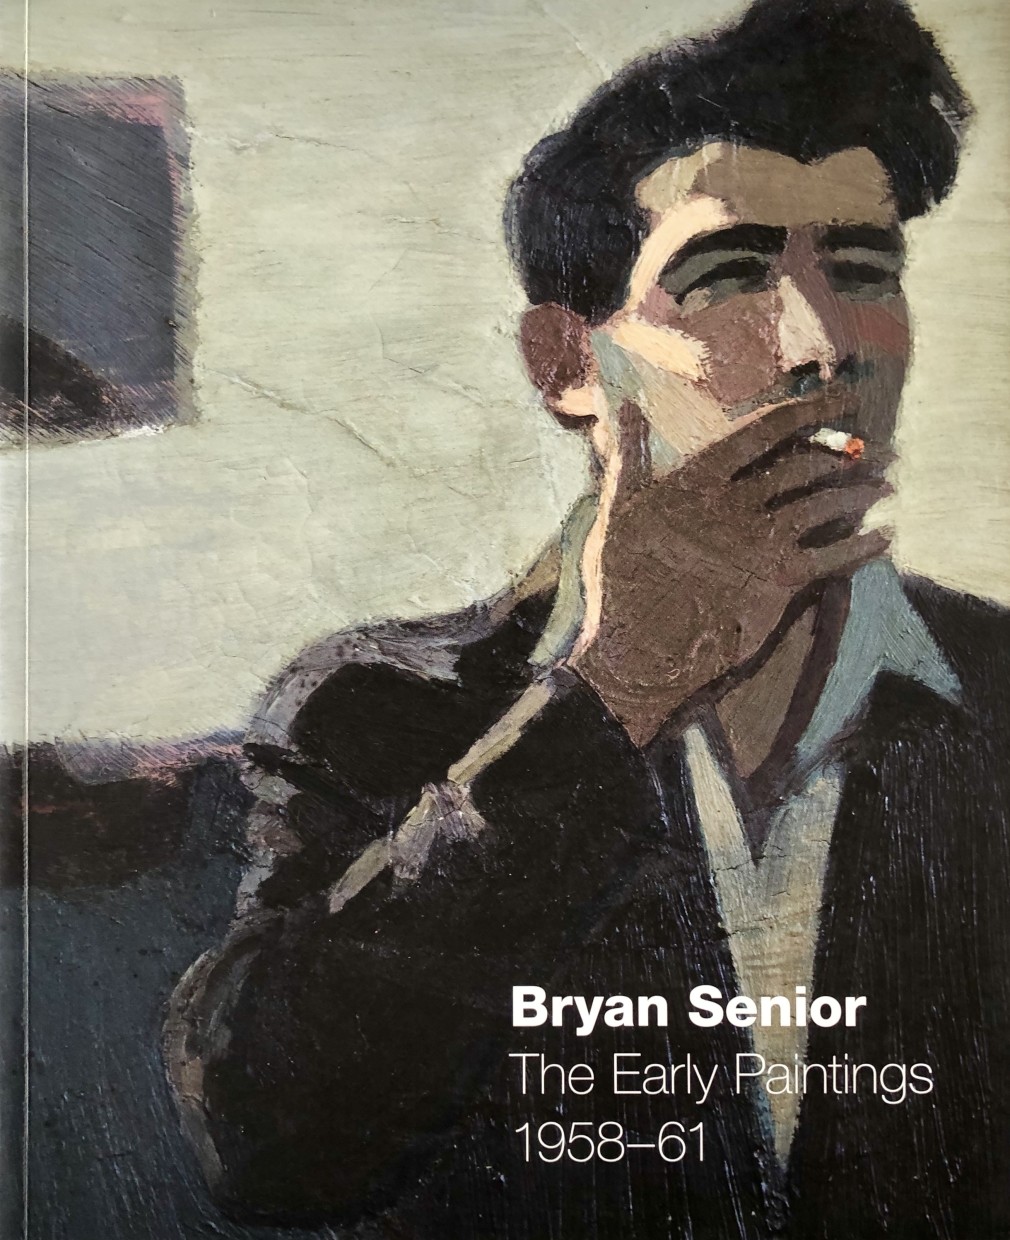 Bryan Senior - The Early Paintings 1958-61